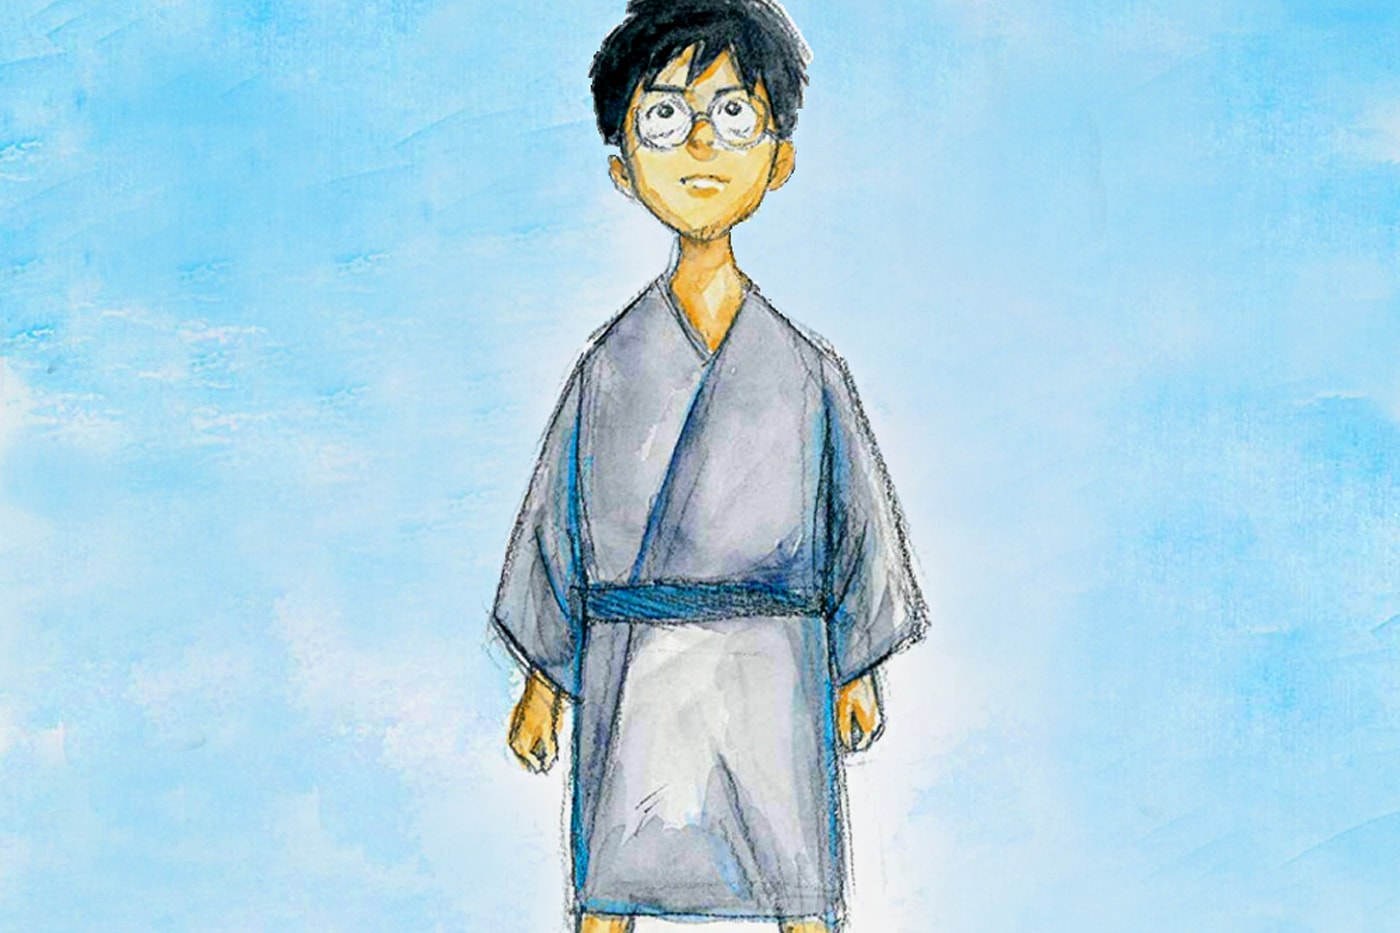 The Works of Hayao Miyazaki. The Japanese Animation Master - First